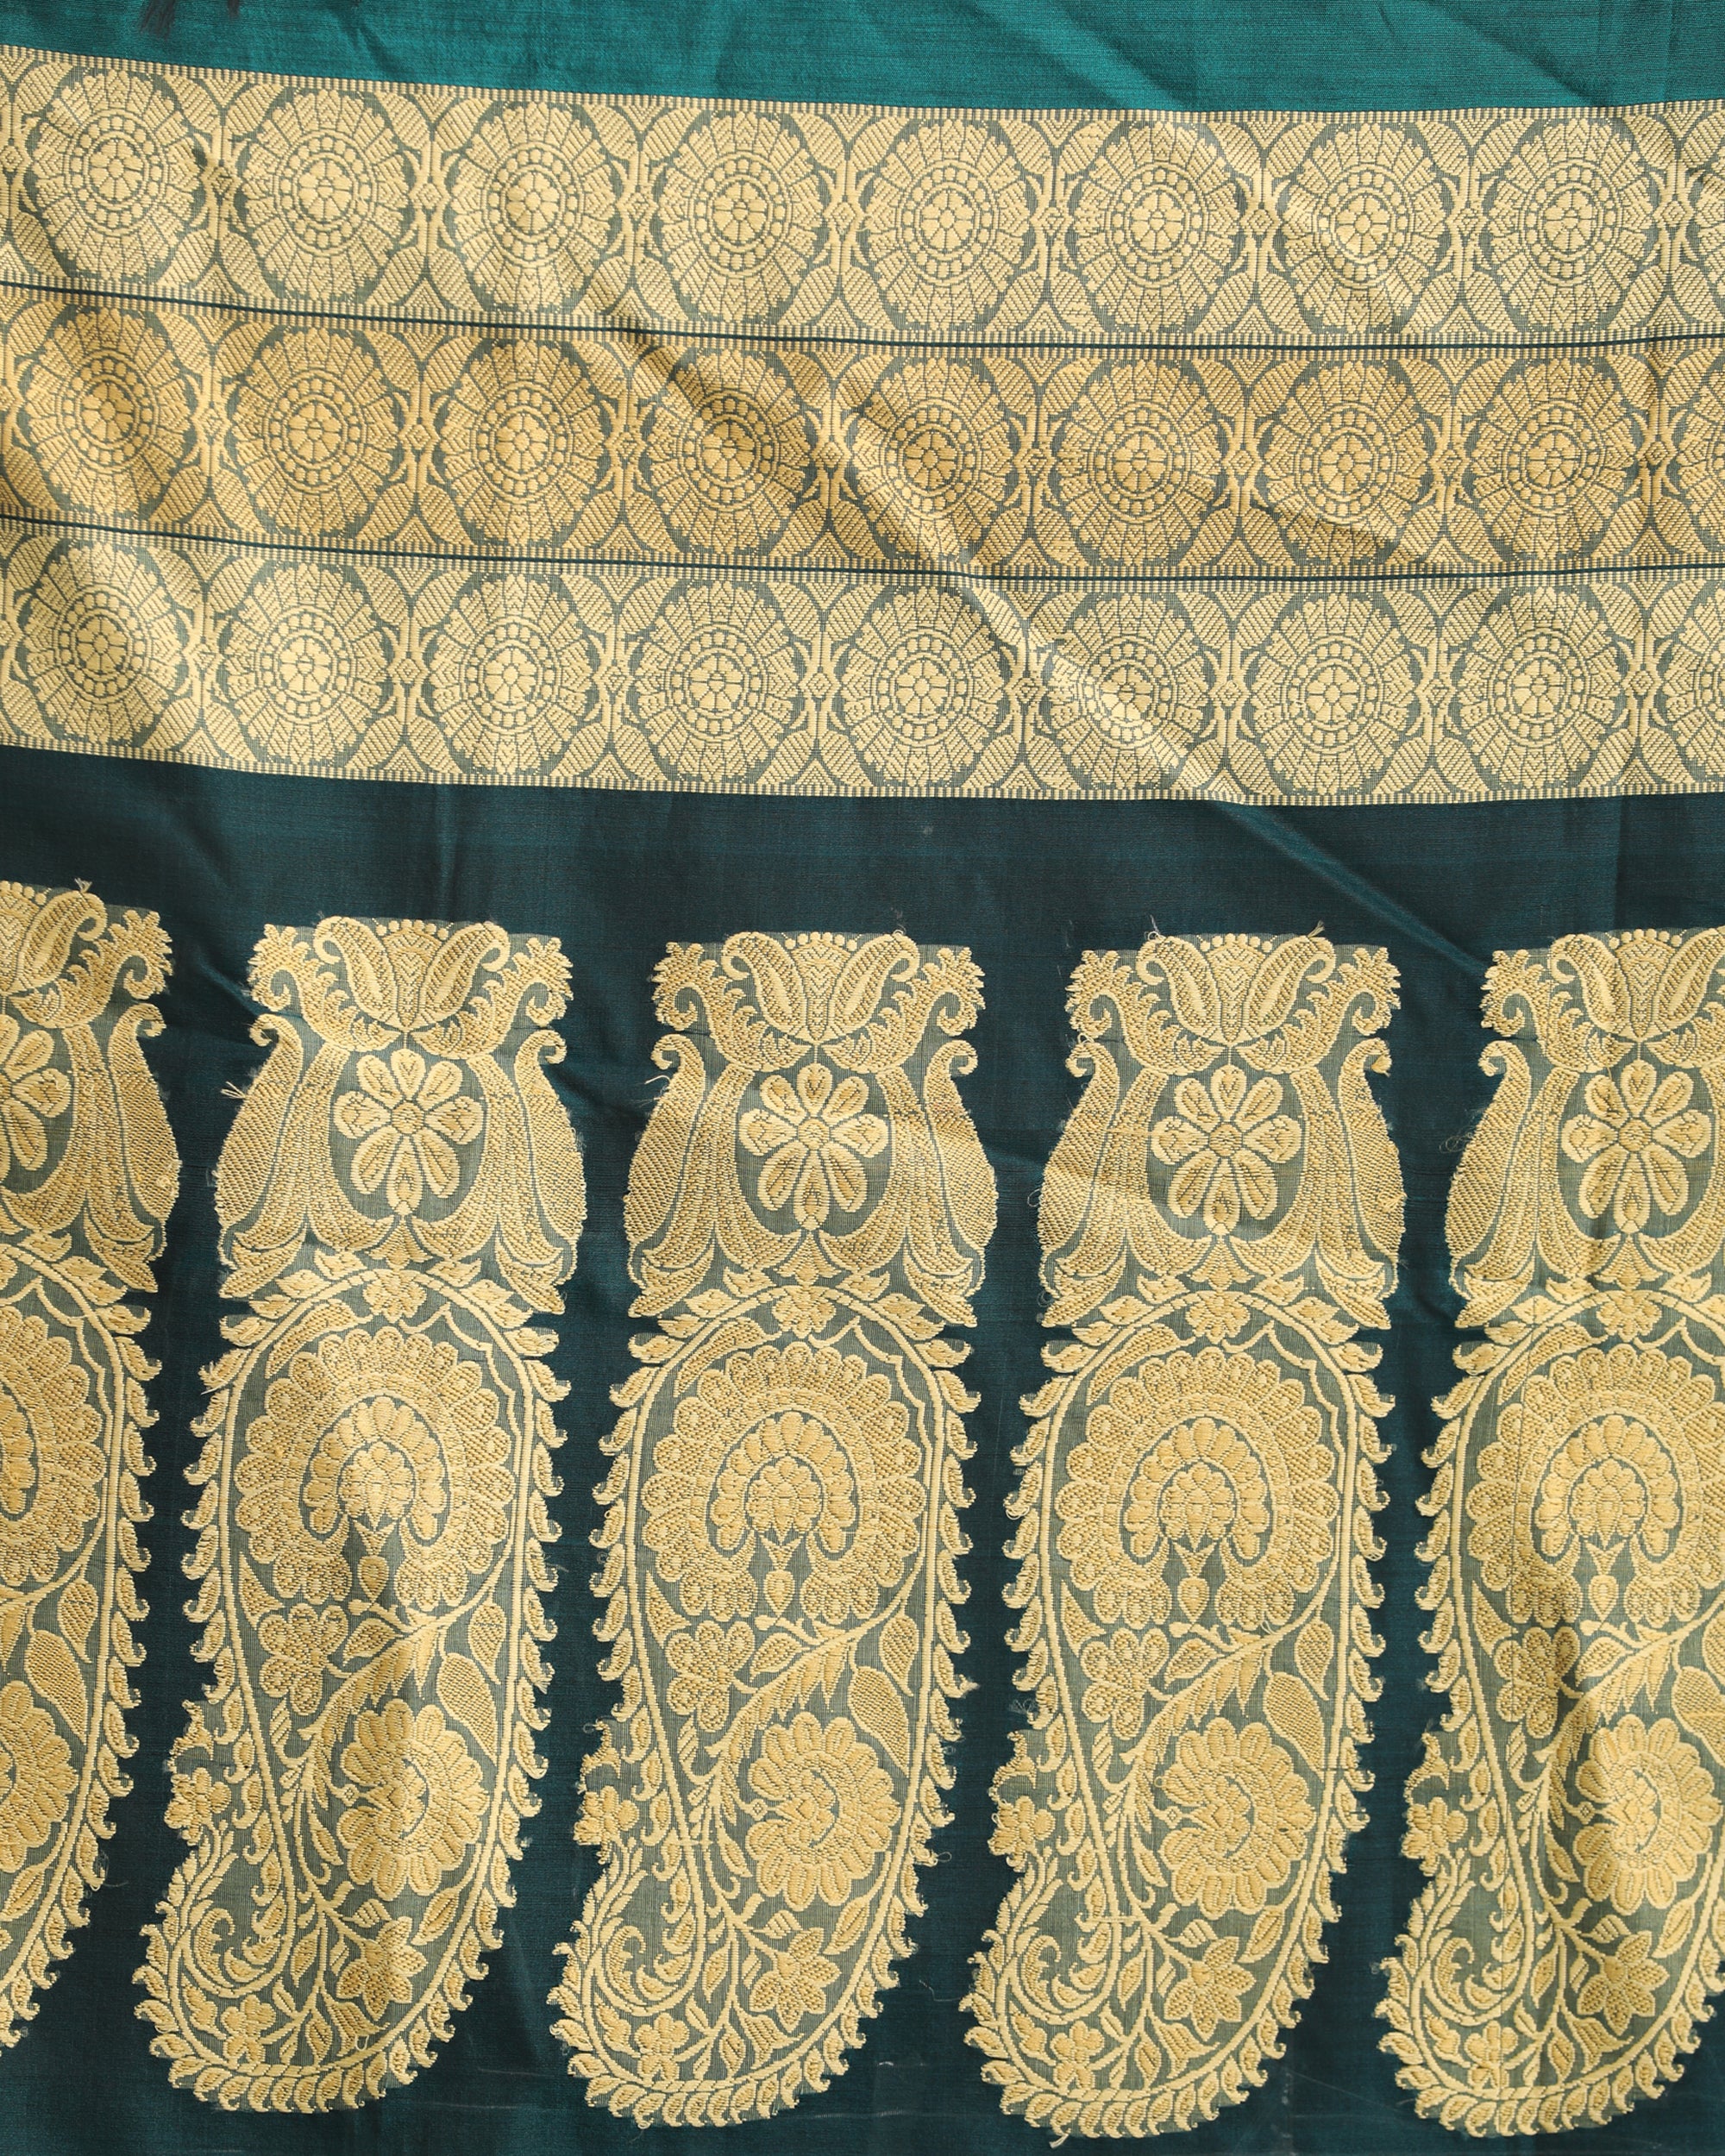 Women's Teal Traditional Handloom Cotton Silk Jamdani Saree - Angoshobha